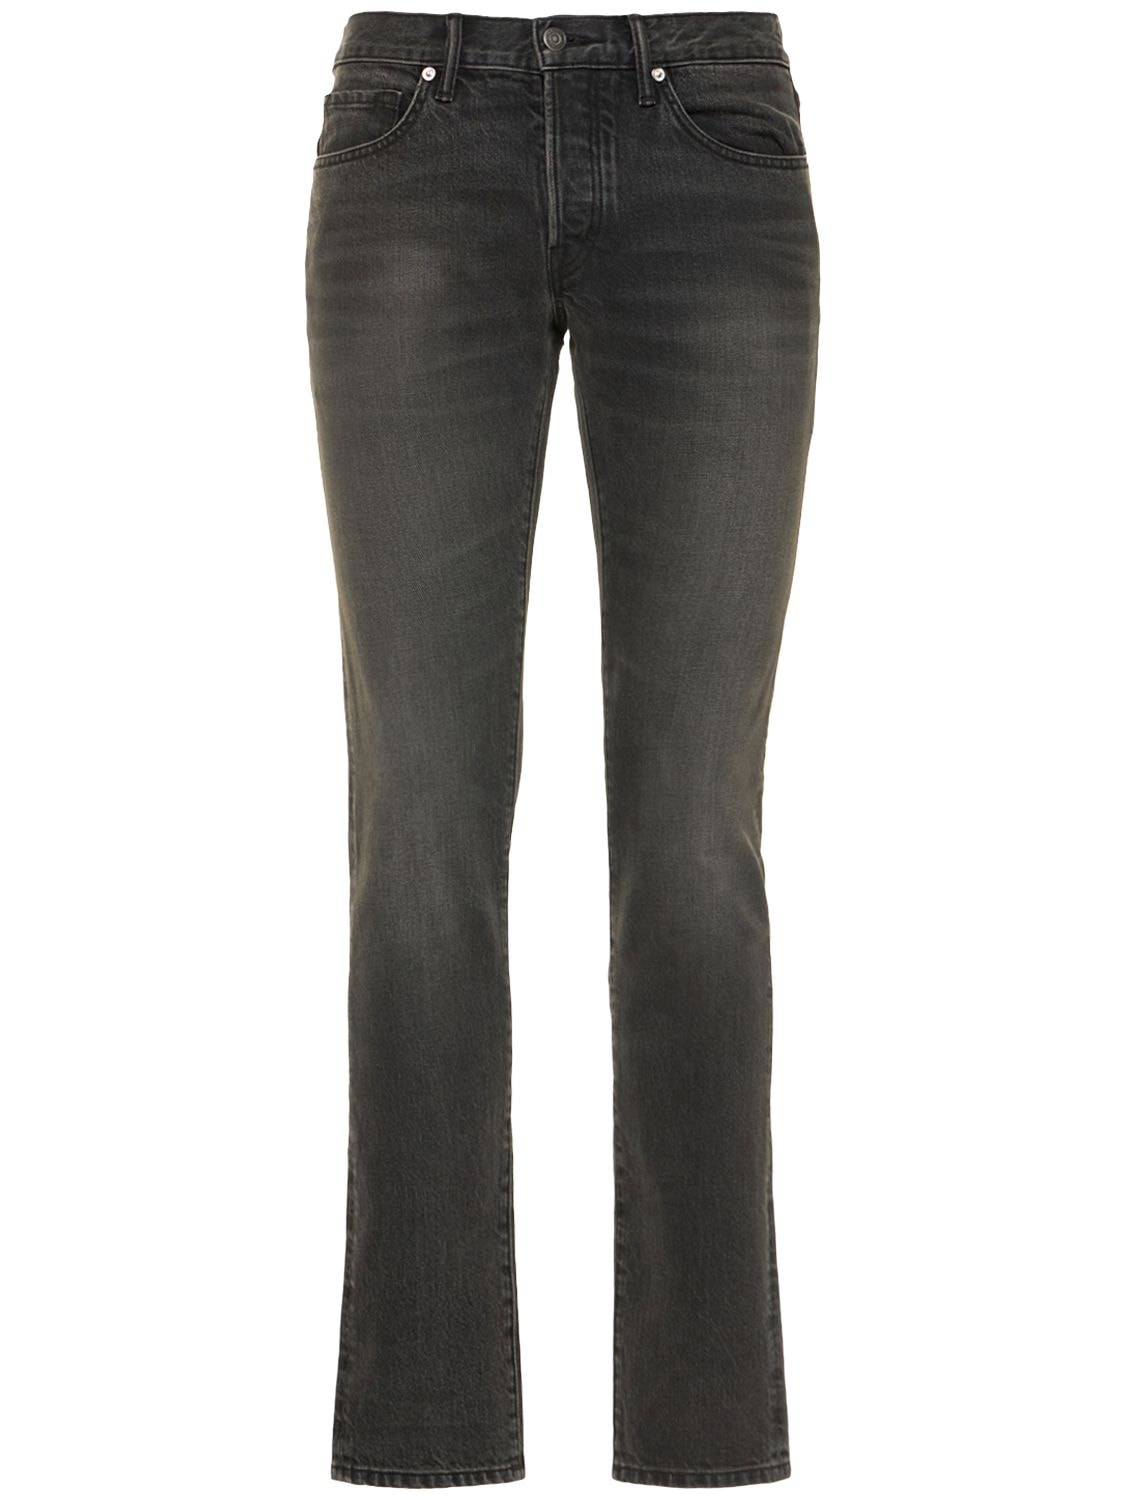 Jeans Slim Fit Aged Black Wash - TOM FORD - Modalova